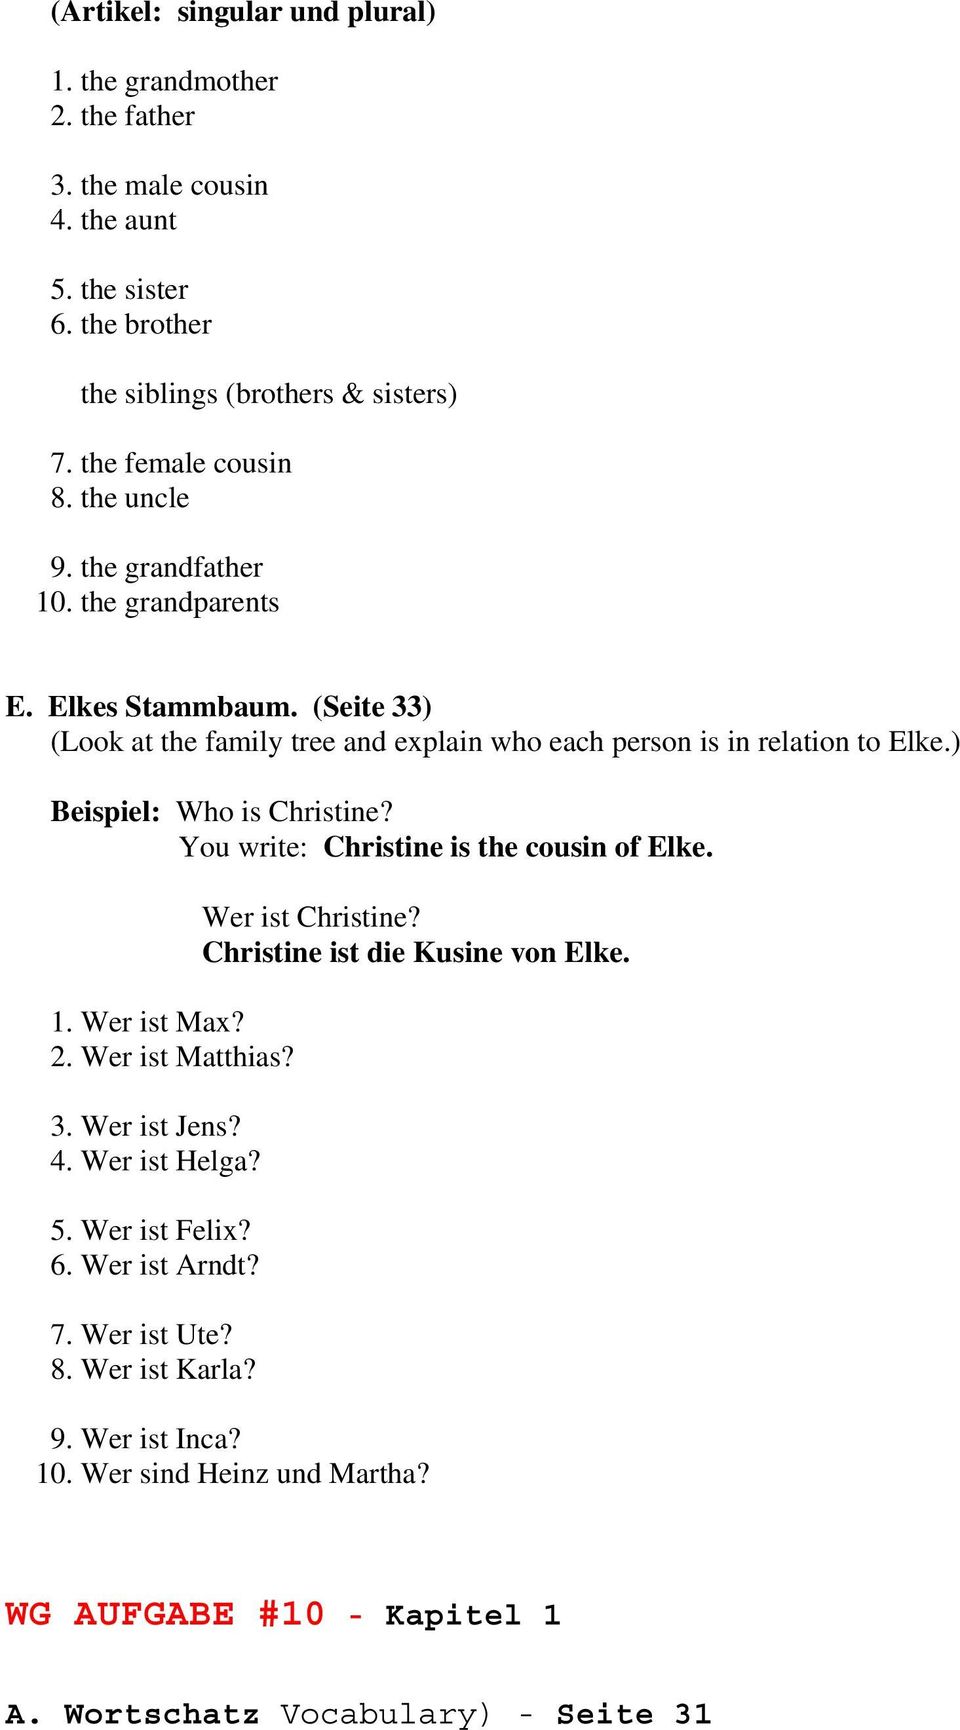 ) Beispiel: Who is Christine? You write: Christine is the cousin of Elke. 1. Wer ist Max? 2. Wer ist Matthias? 3. Wer ist Jens? 4. Wer ist Helga? 5. Wer ist Felix? 6.